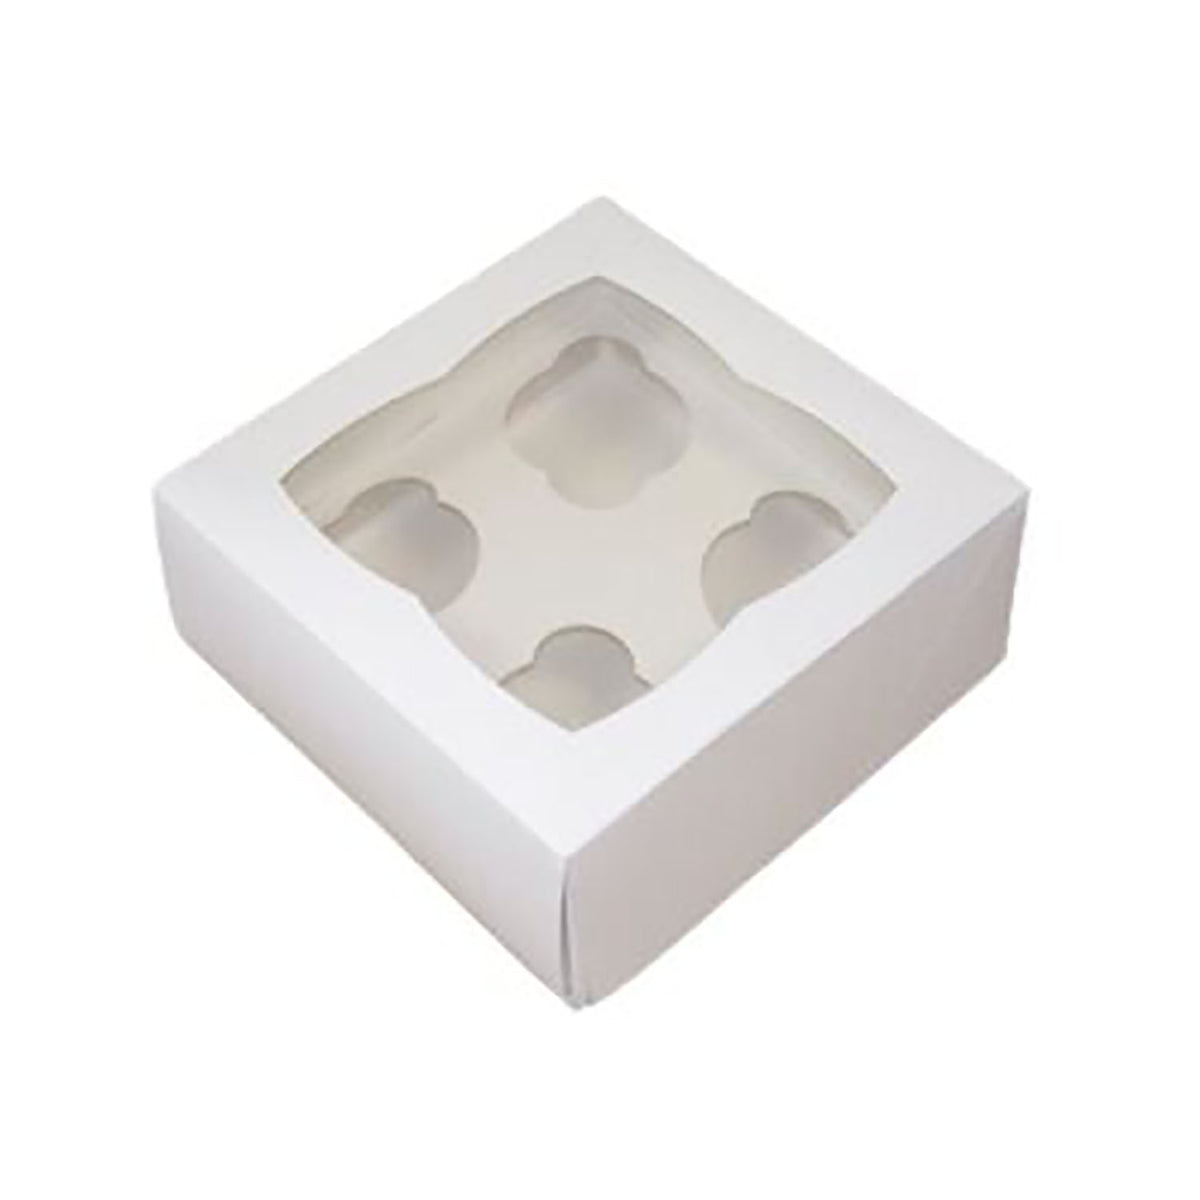 Windowed Cupcake Box 4-Cup Insert 100Pk (170x170x75mm)